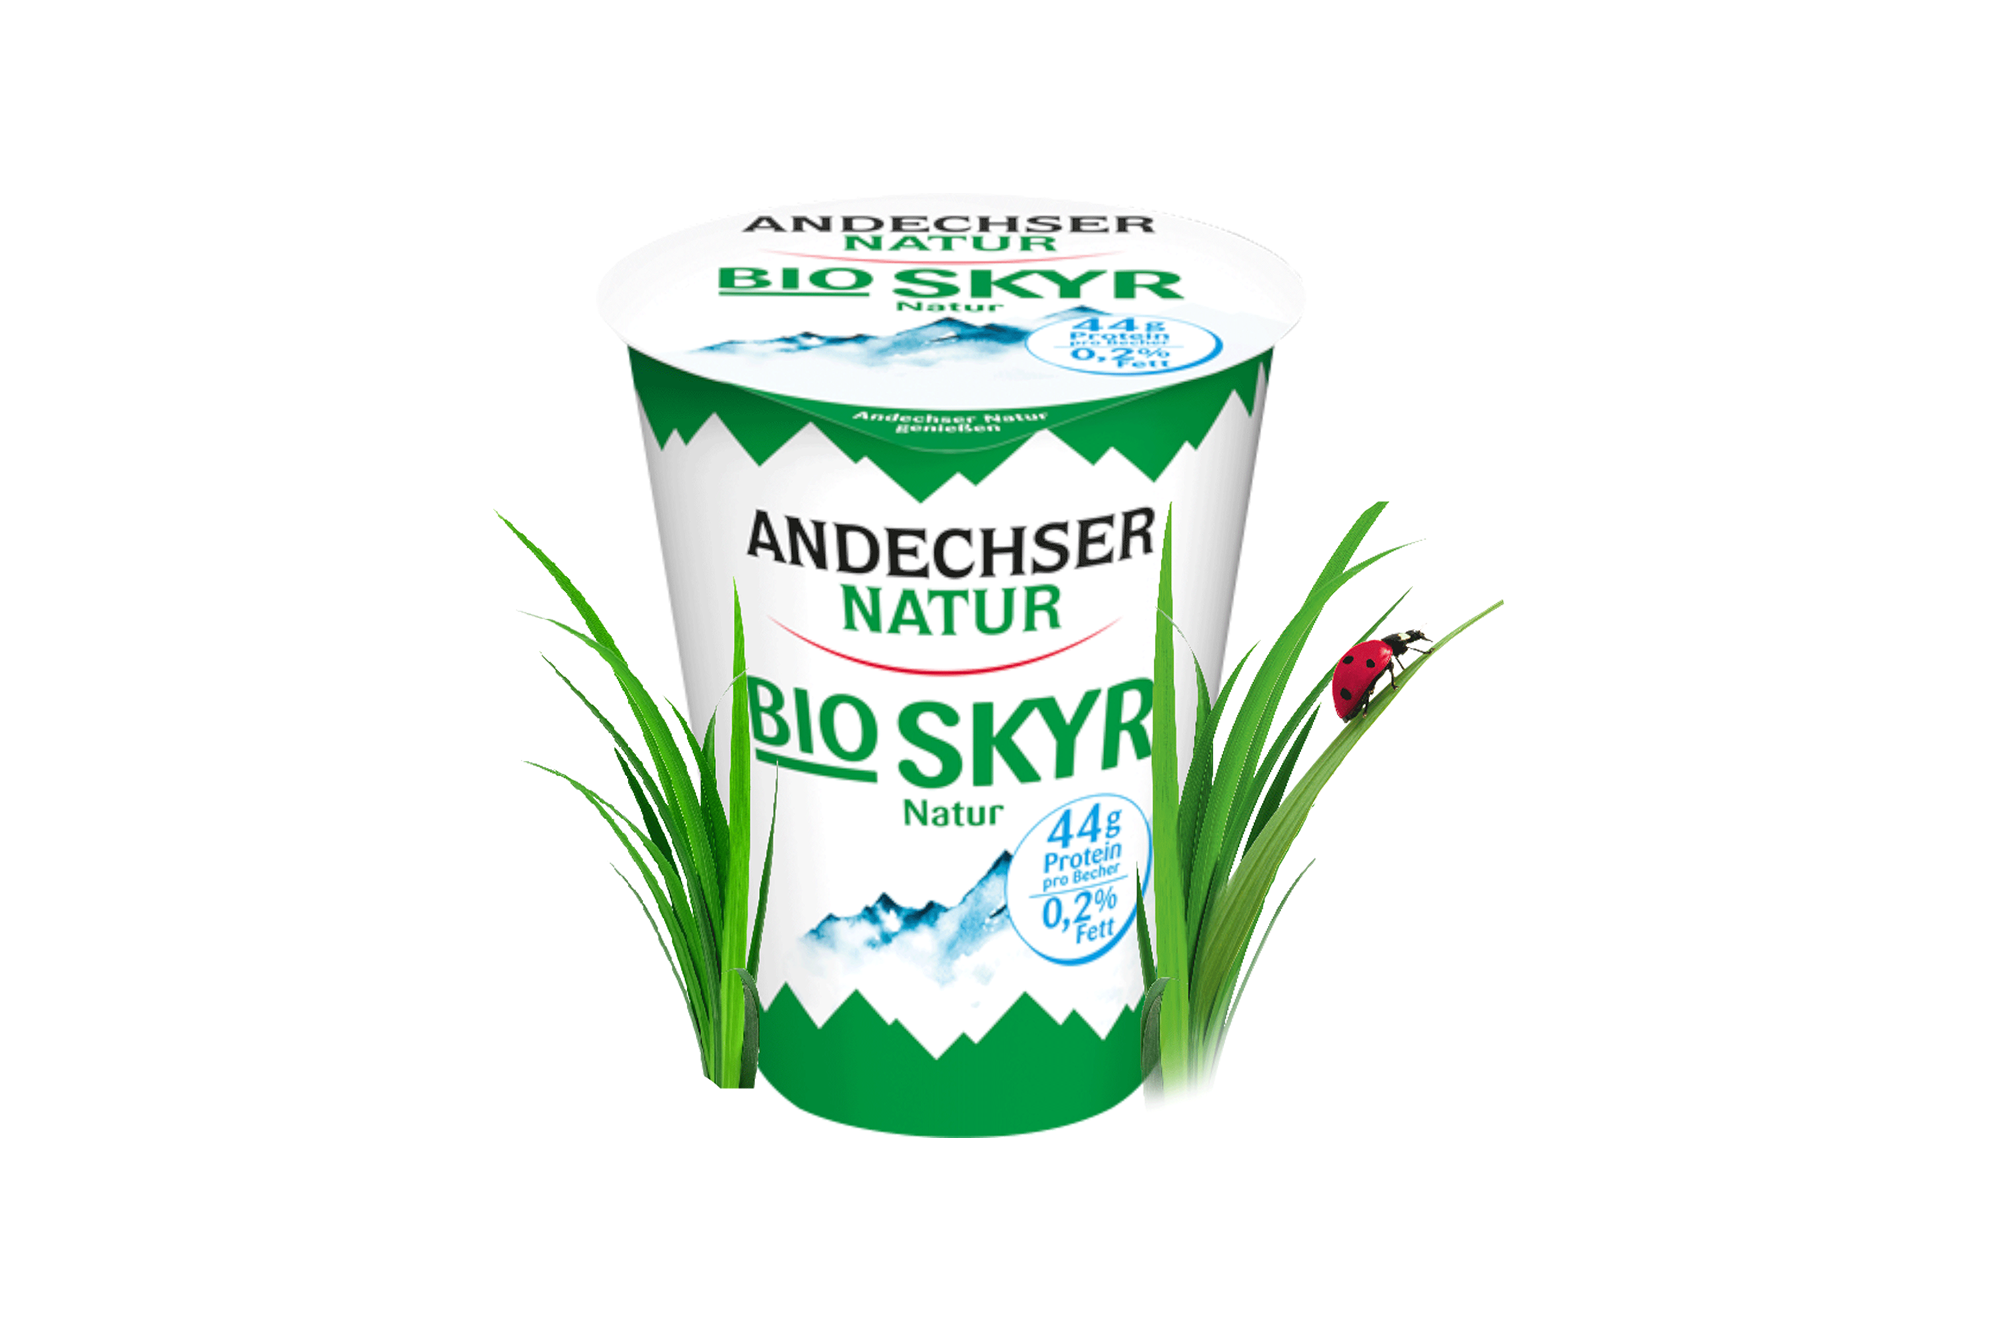 Andechser Natur Bio-Sykr Eve Leserliebling 2020